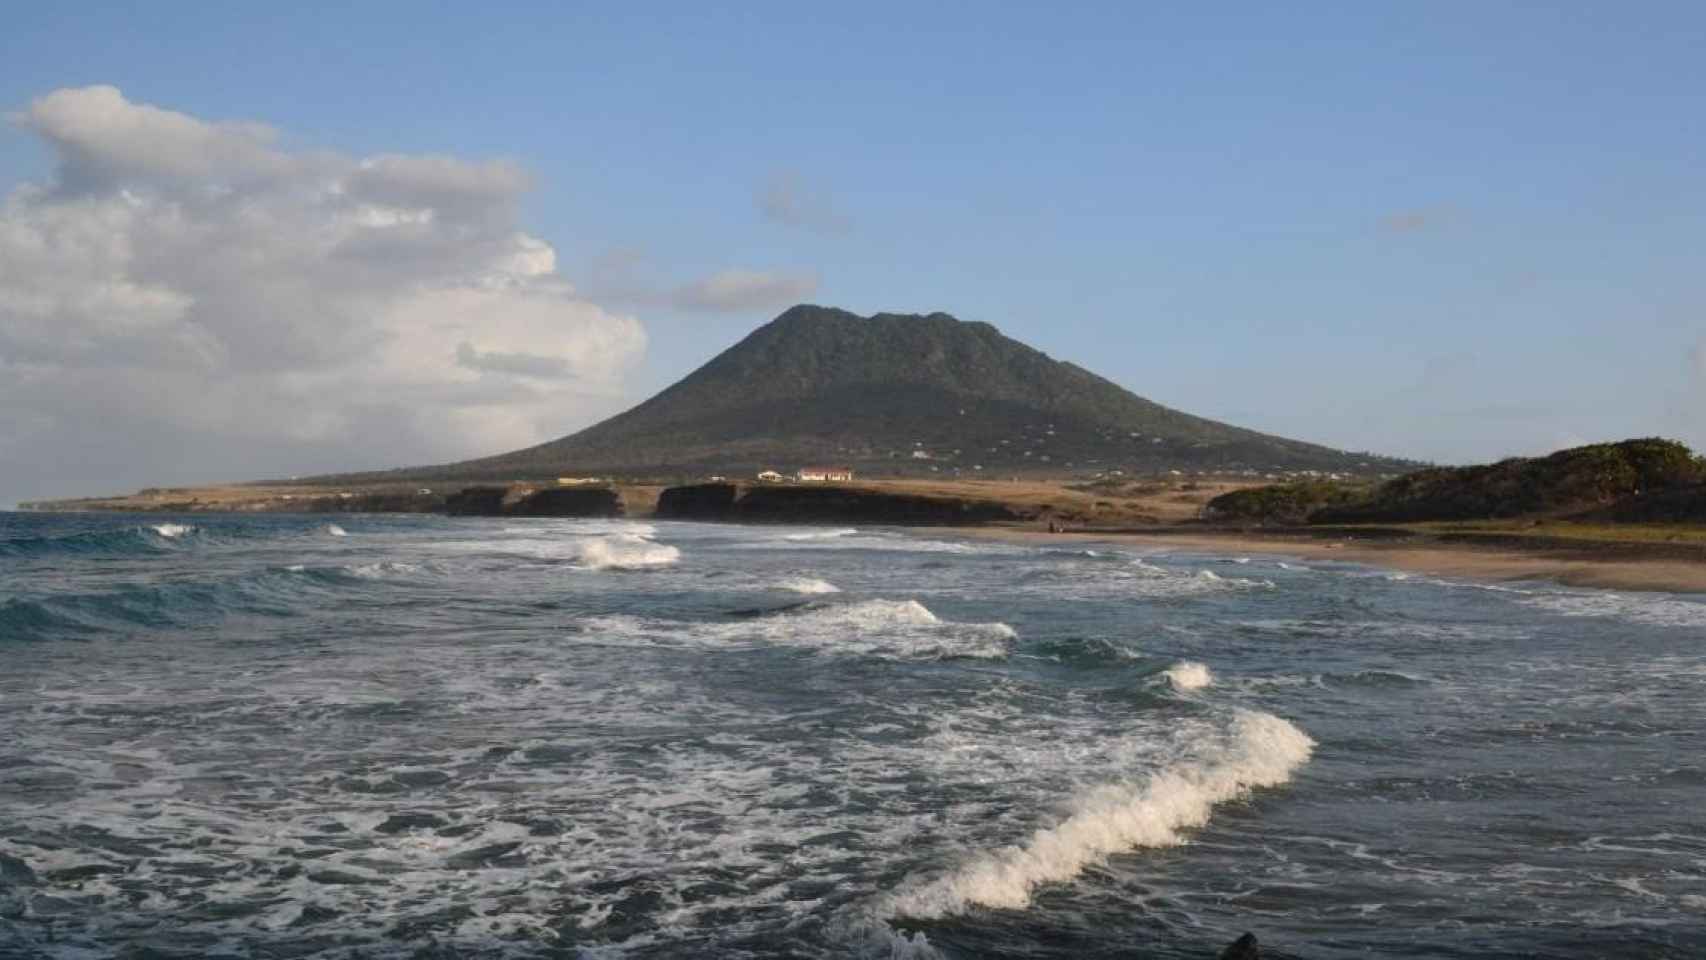 Riesgo de tsunami en Canarias /EP